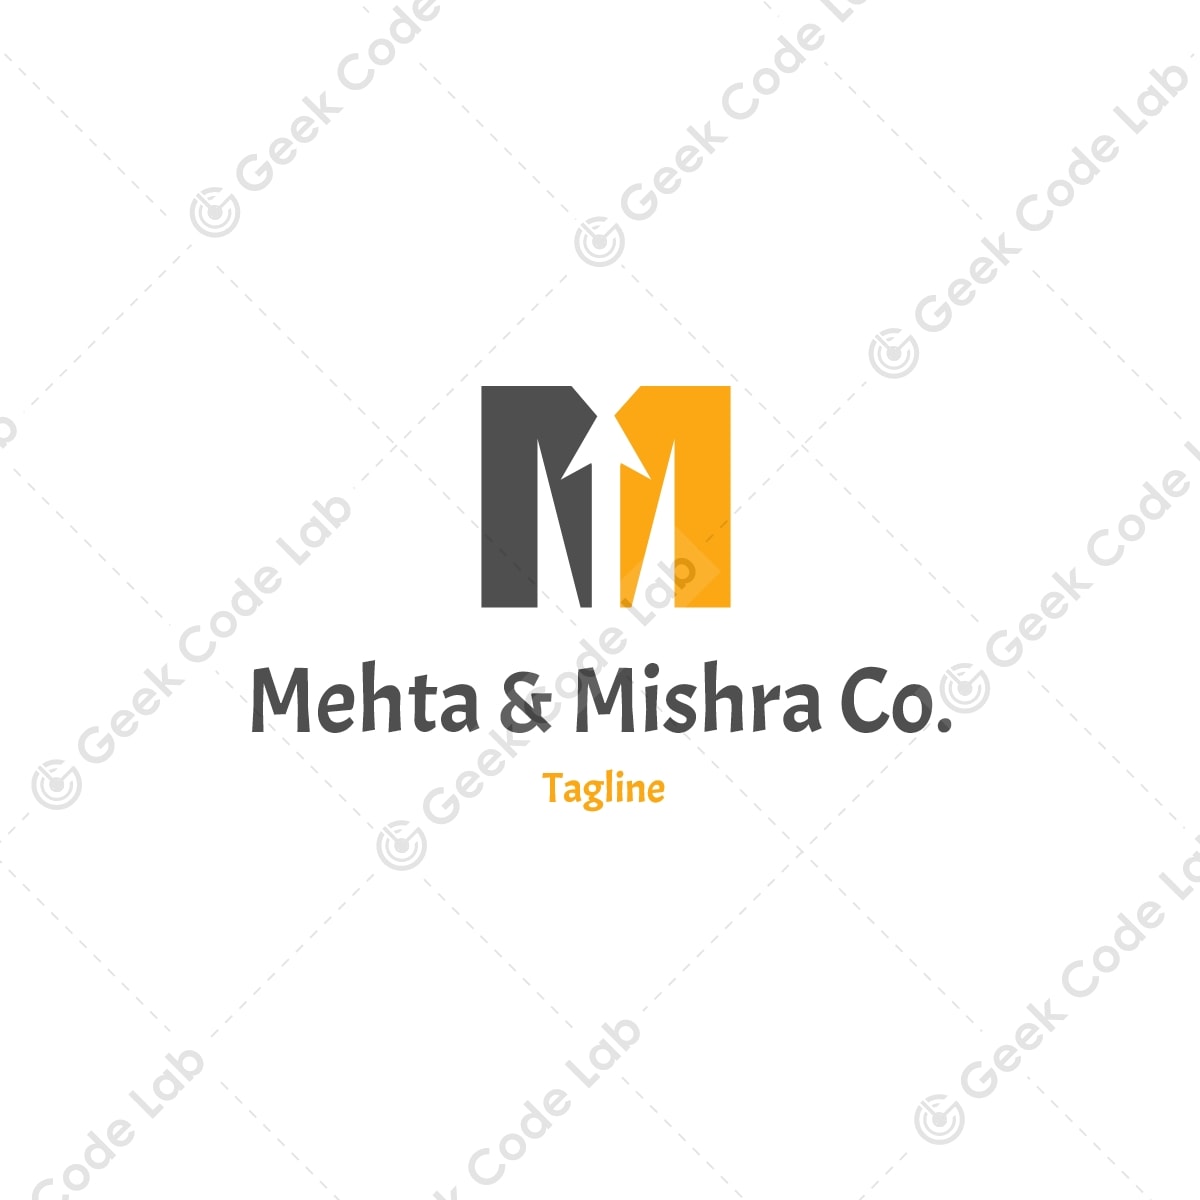 Mehta & Mishra Co